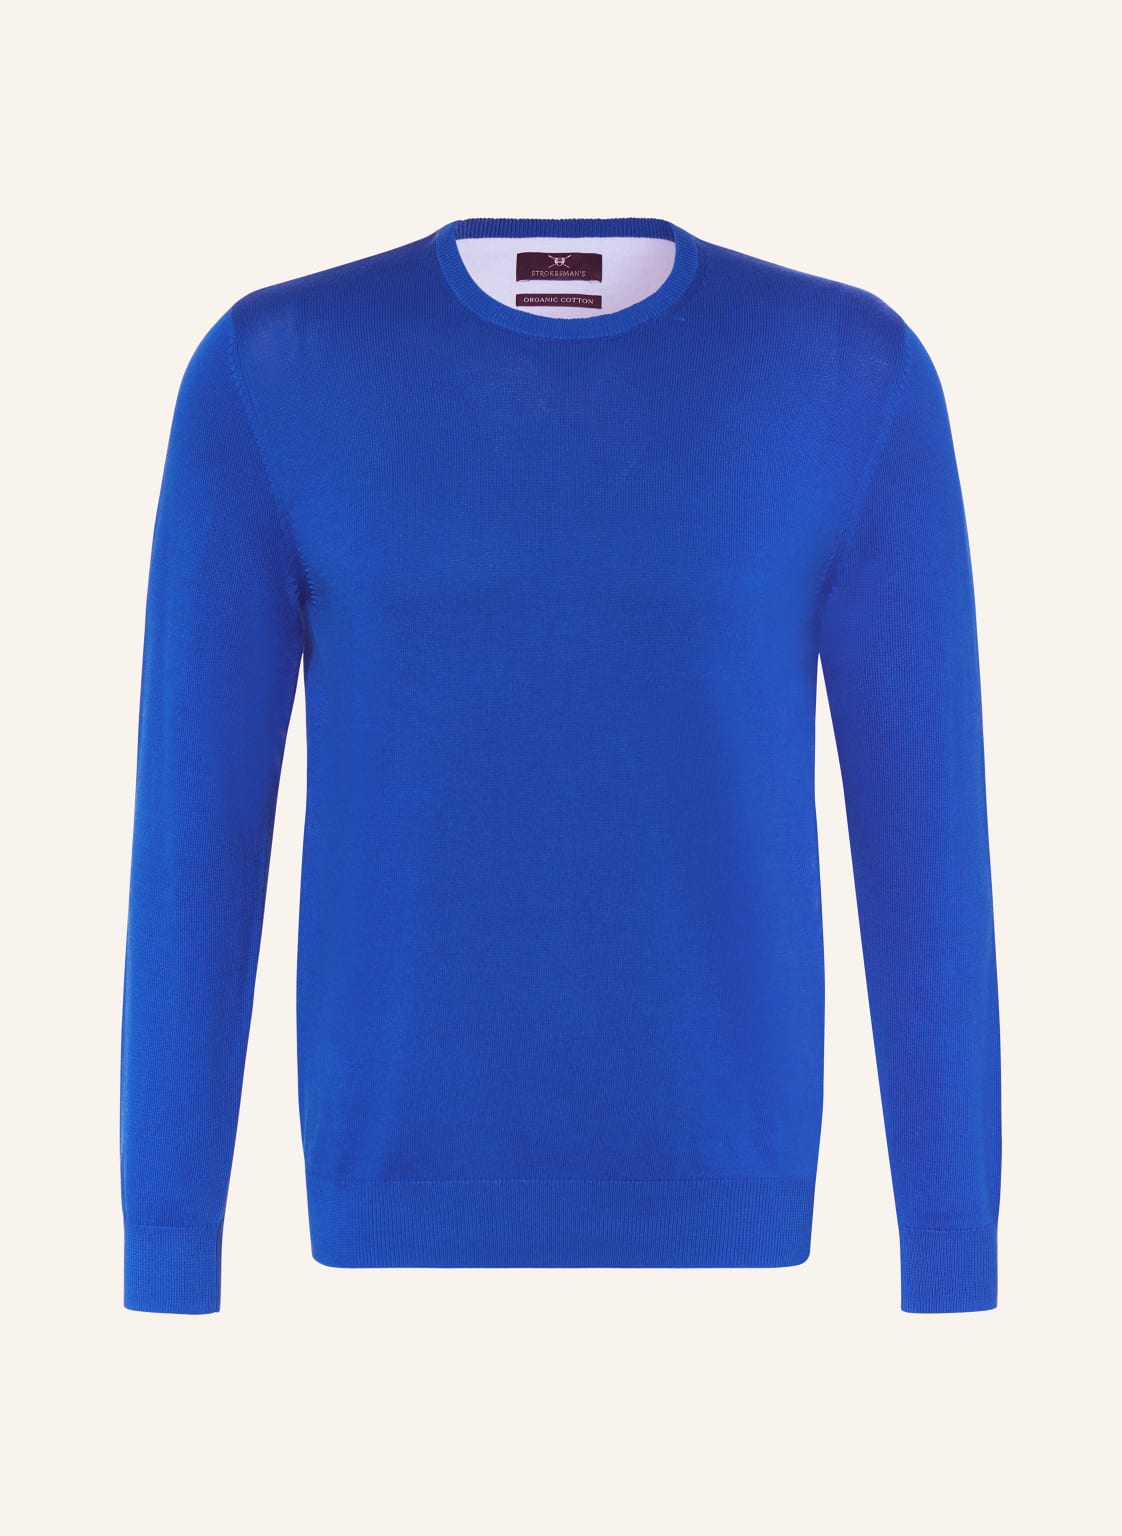 Strokesman's Pullover blau von STROKESMAN'S